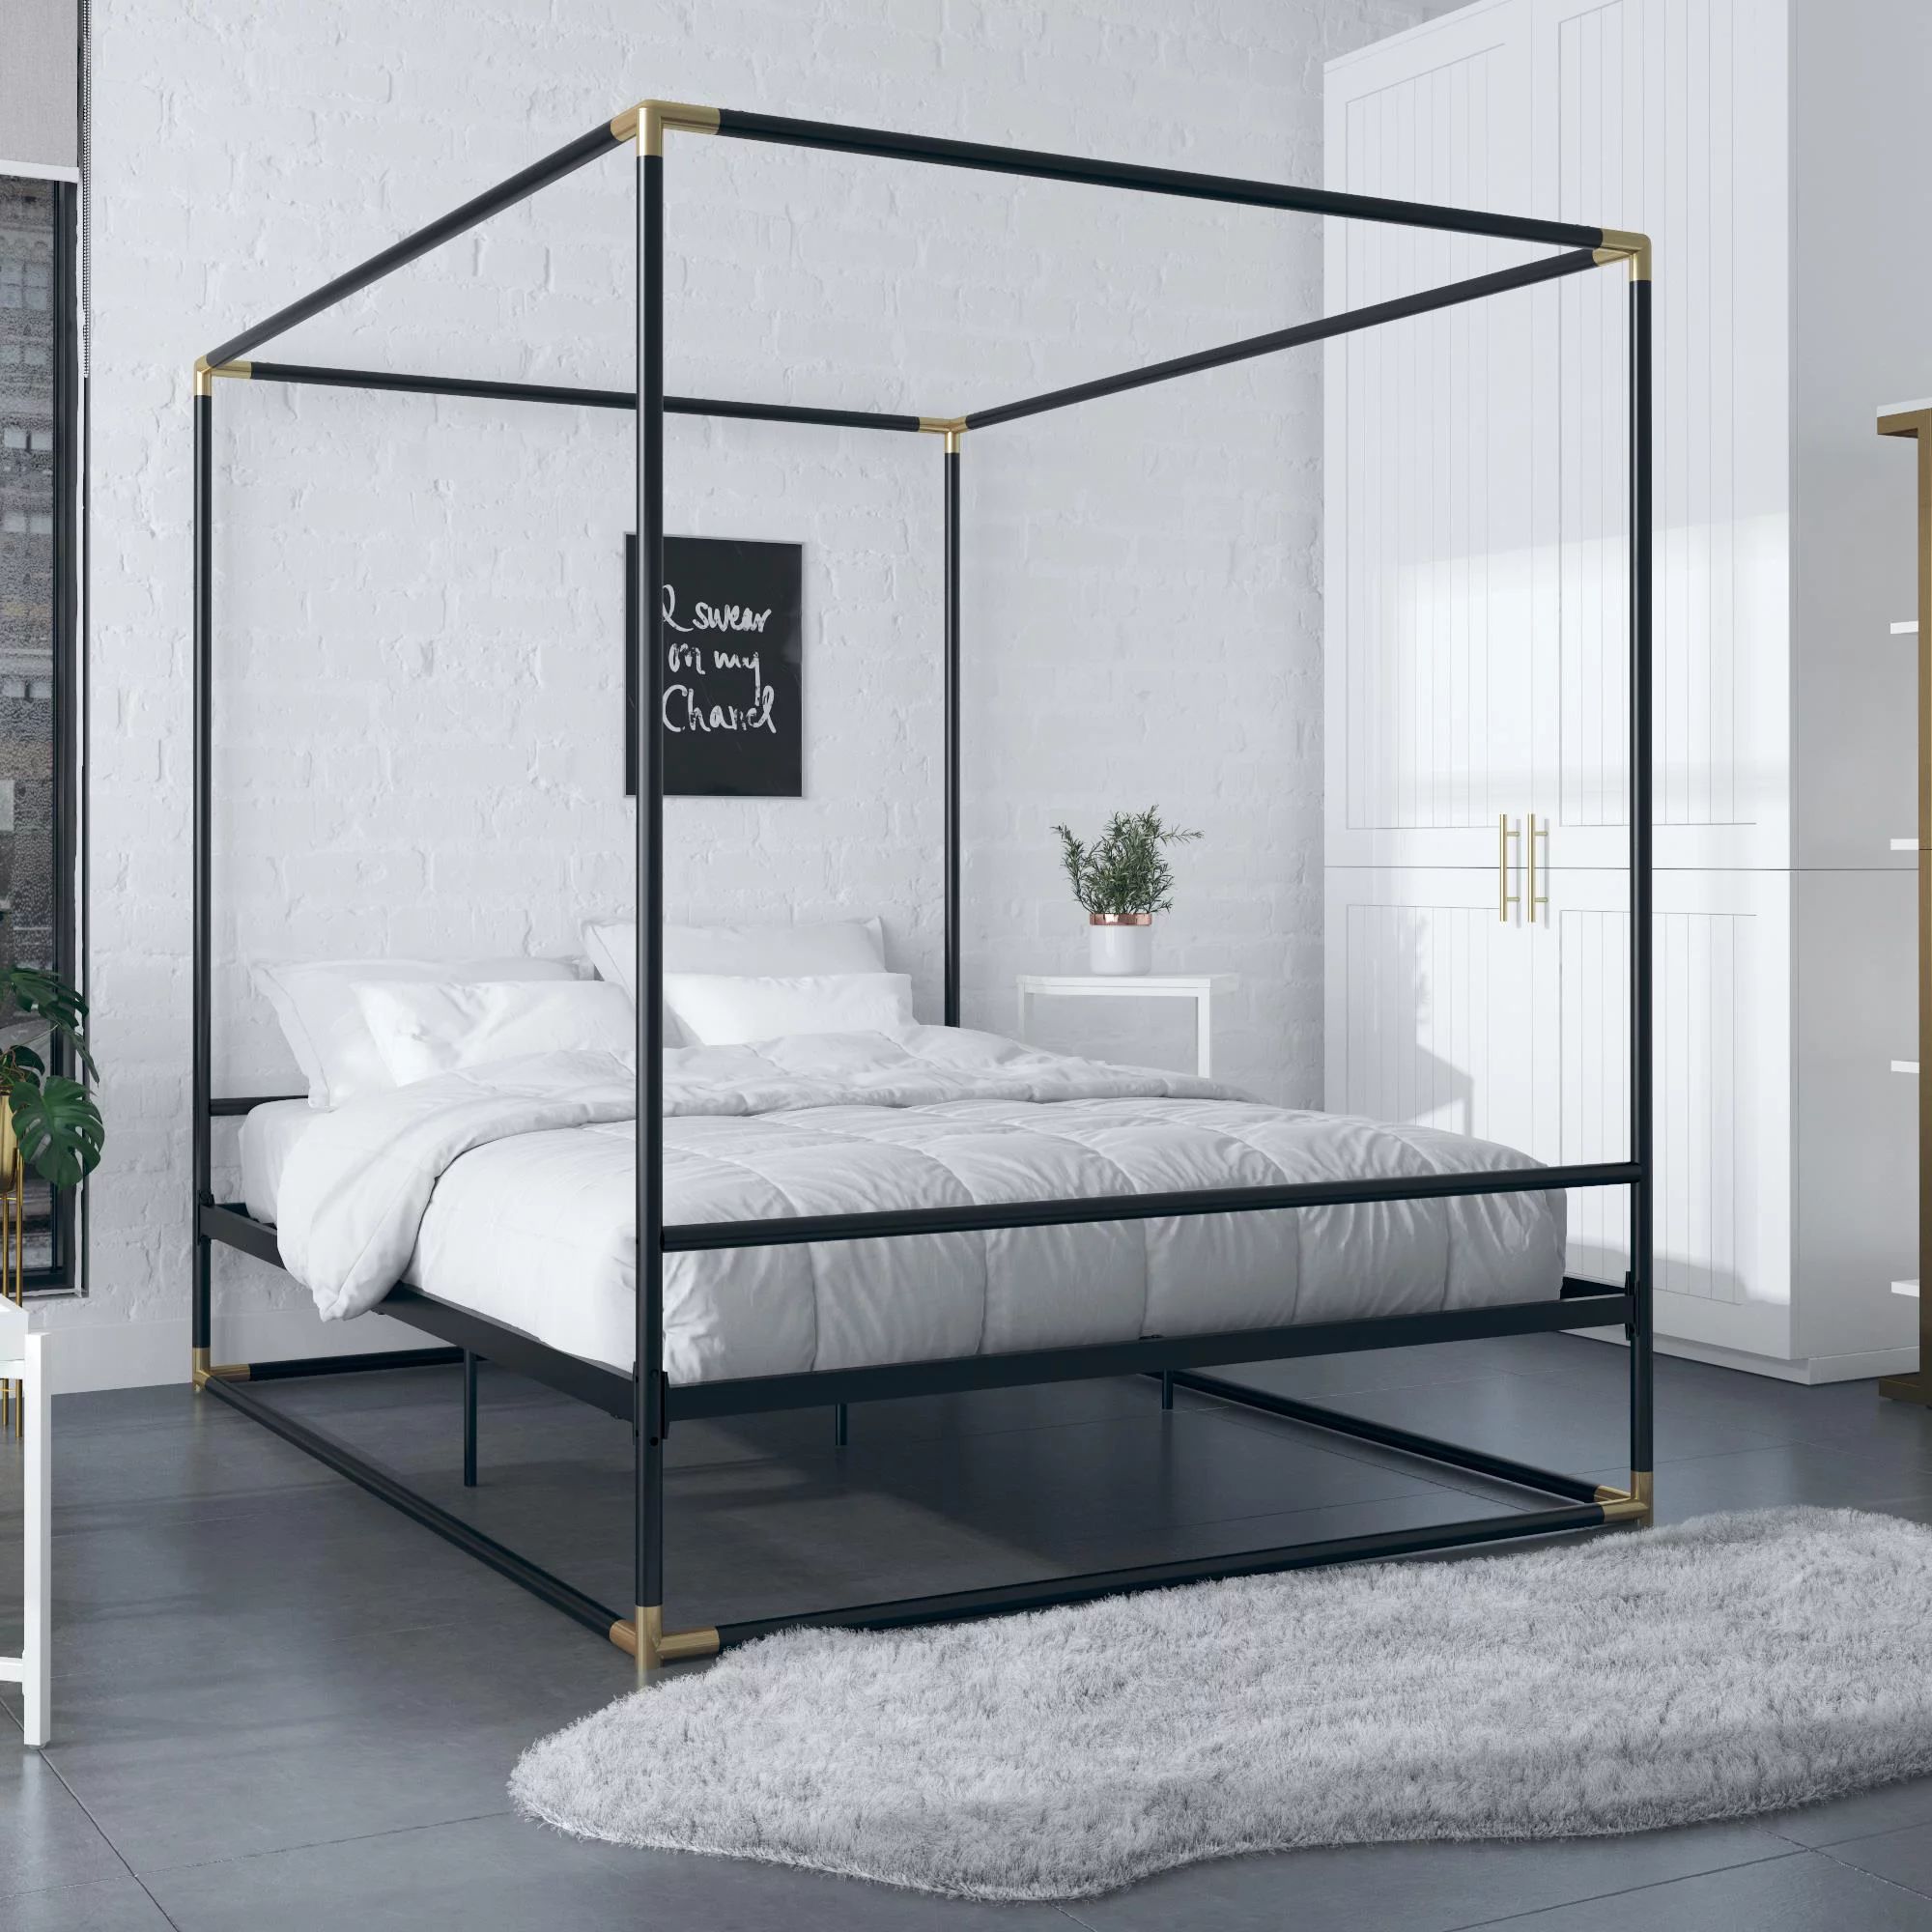 CosmoLiving Celeste Canopy Metal Bed, Full, Black/Gold | Walmart (US)